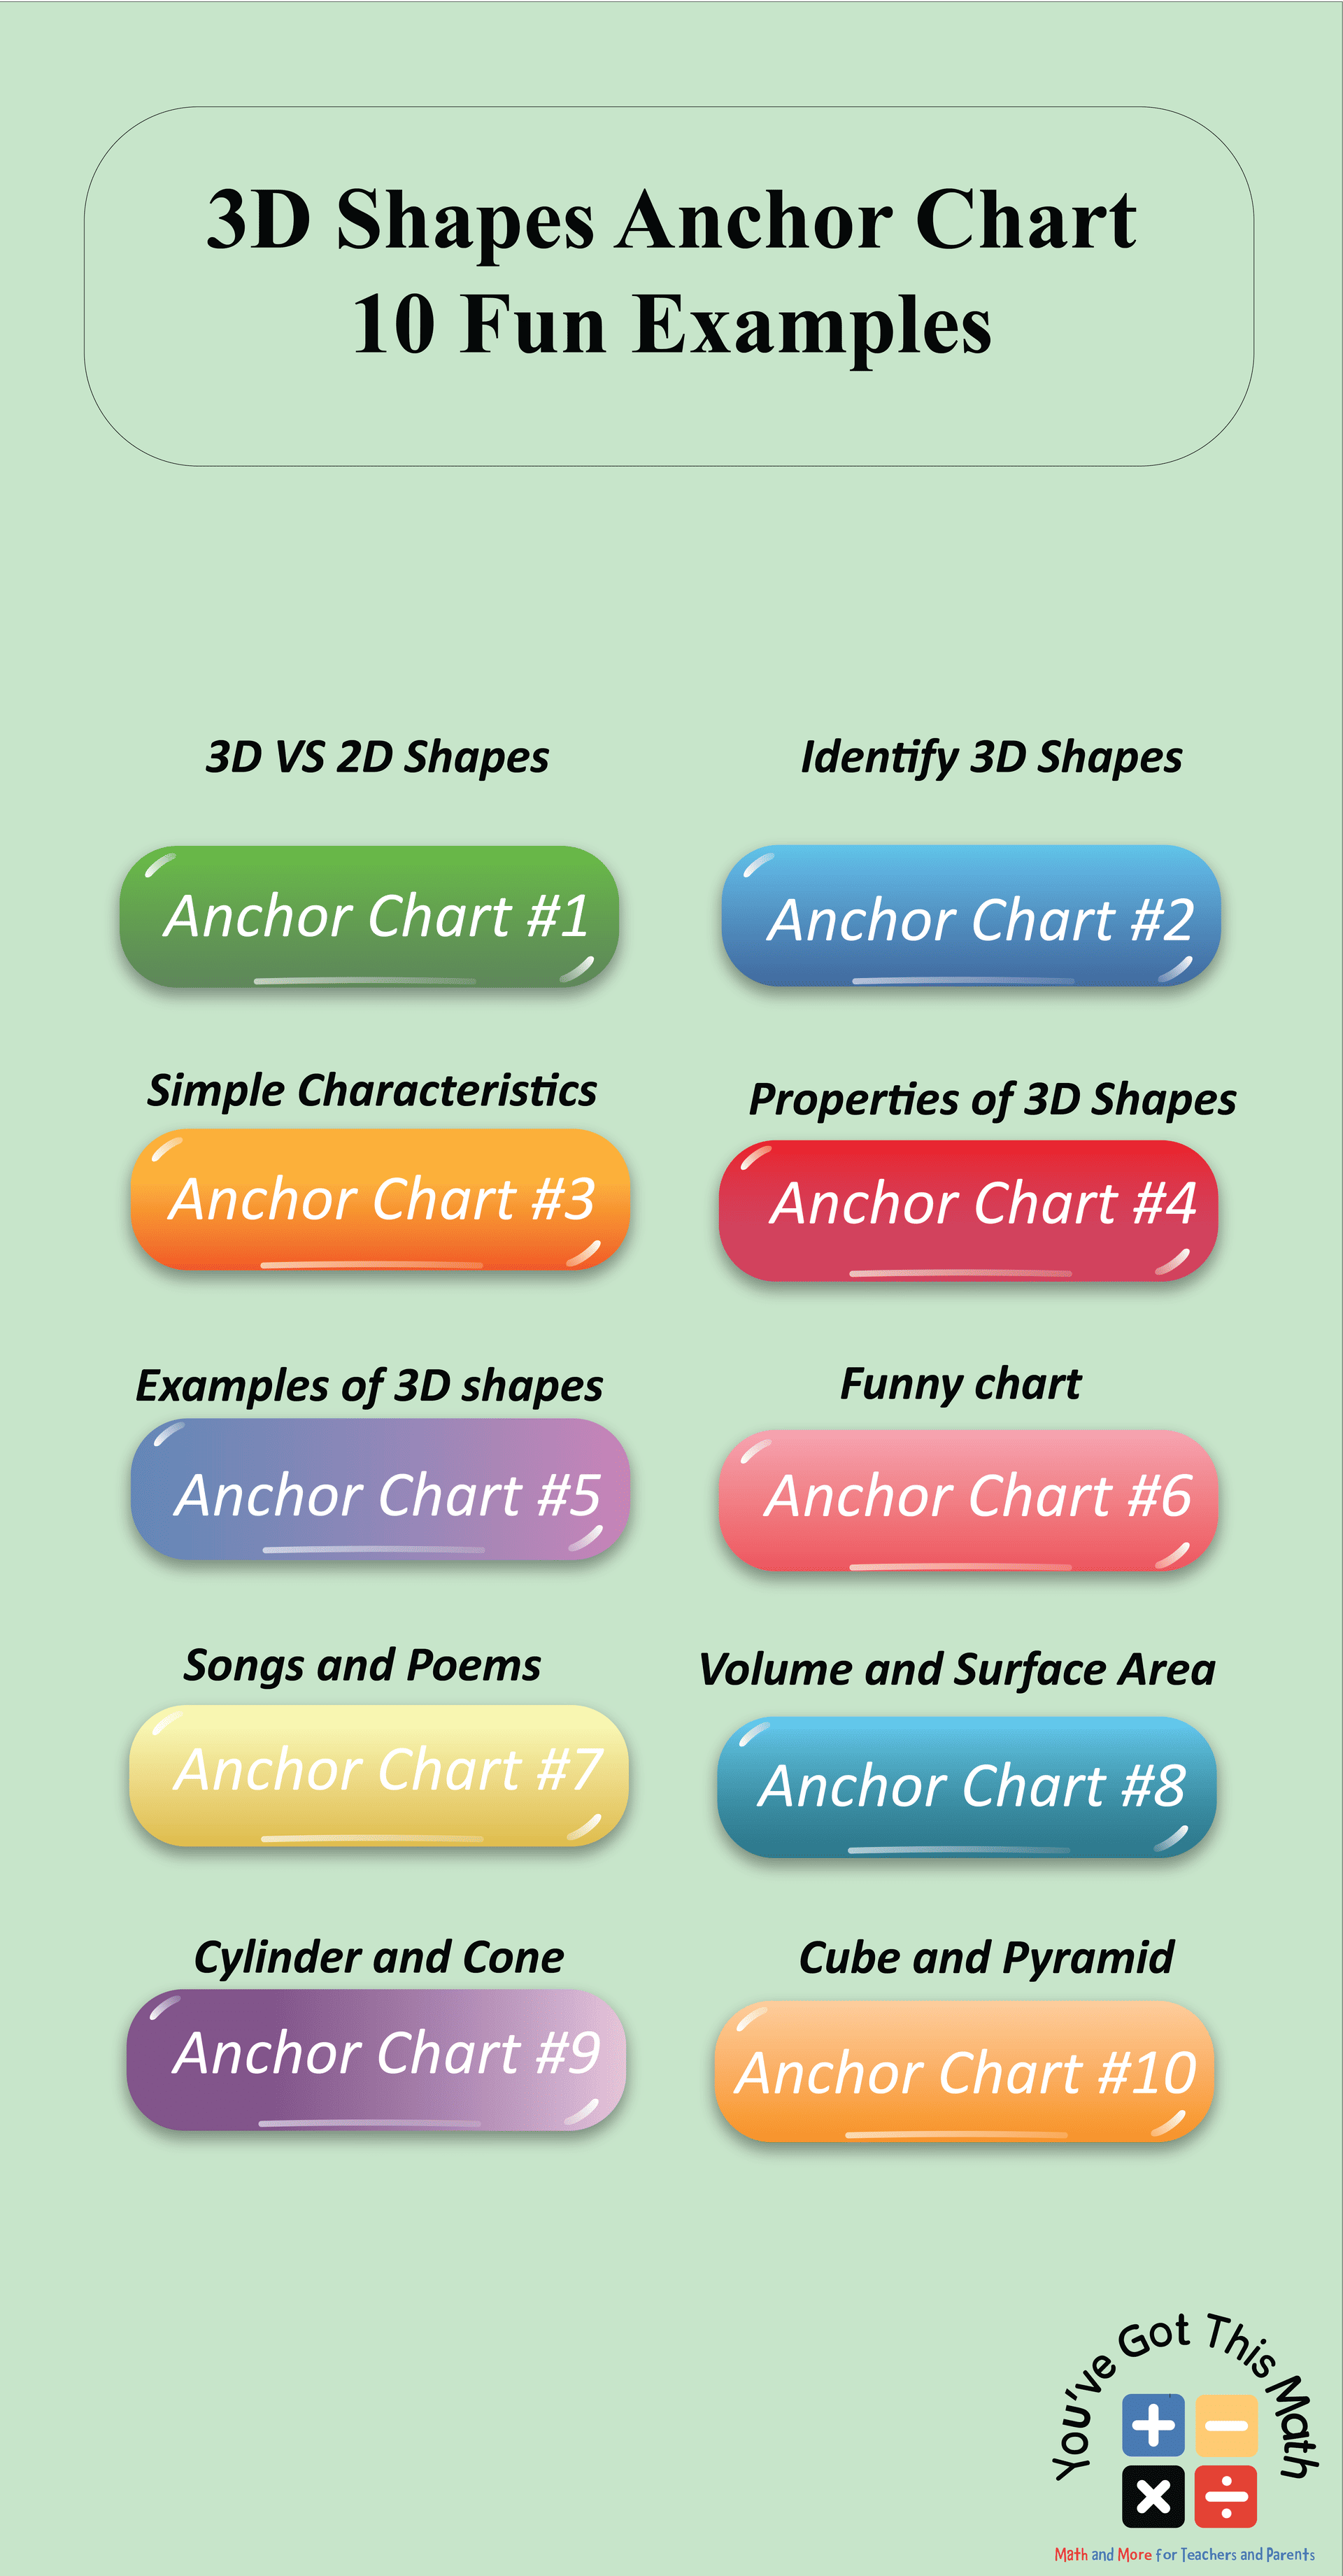 3D shapes anchor chart